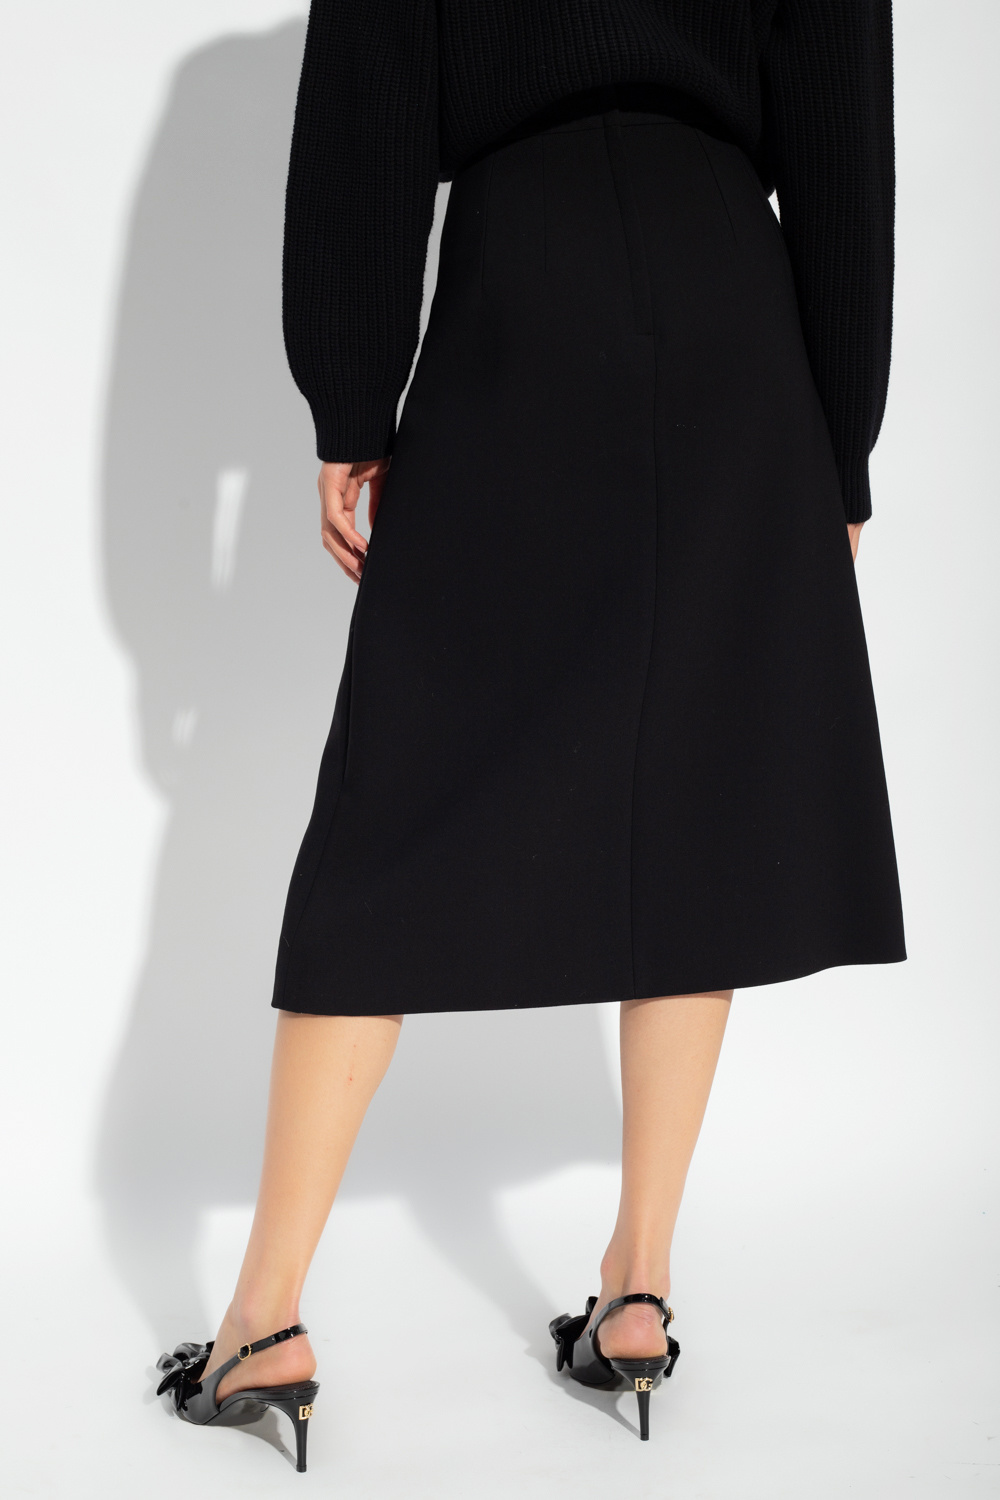 Dolce & Gabbana Skirt with slit